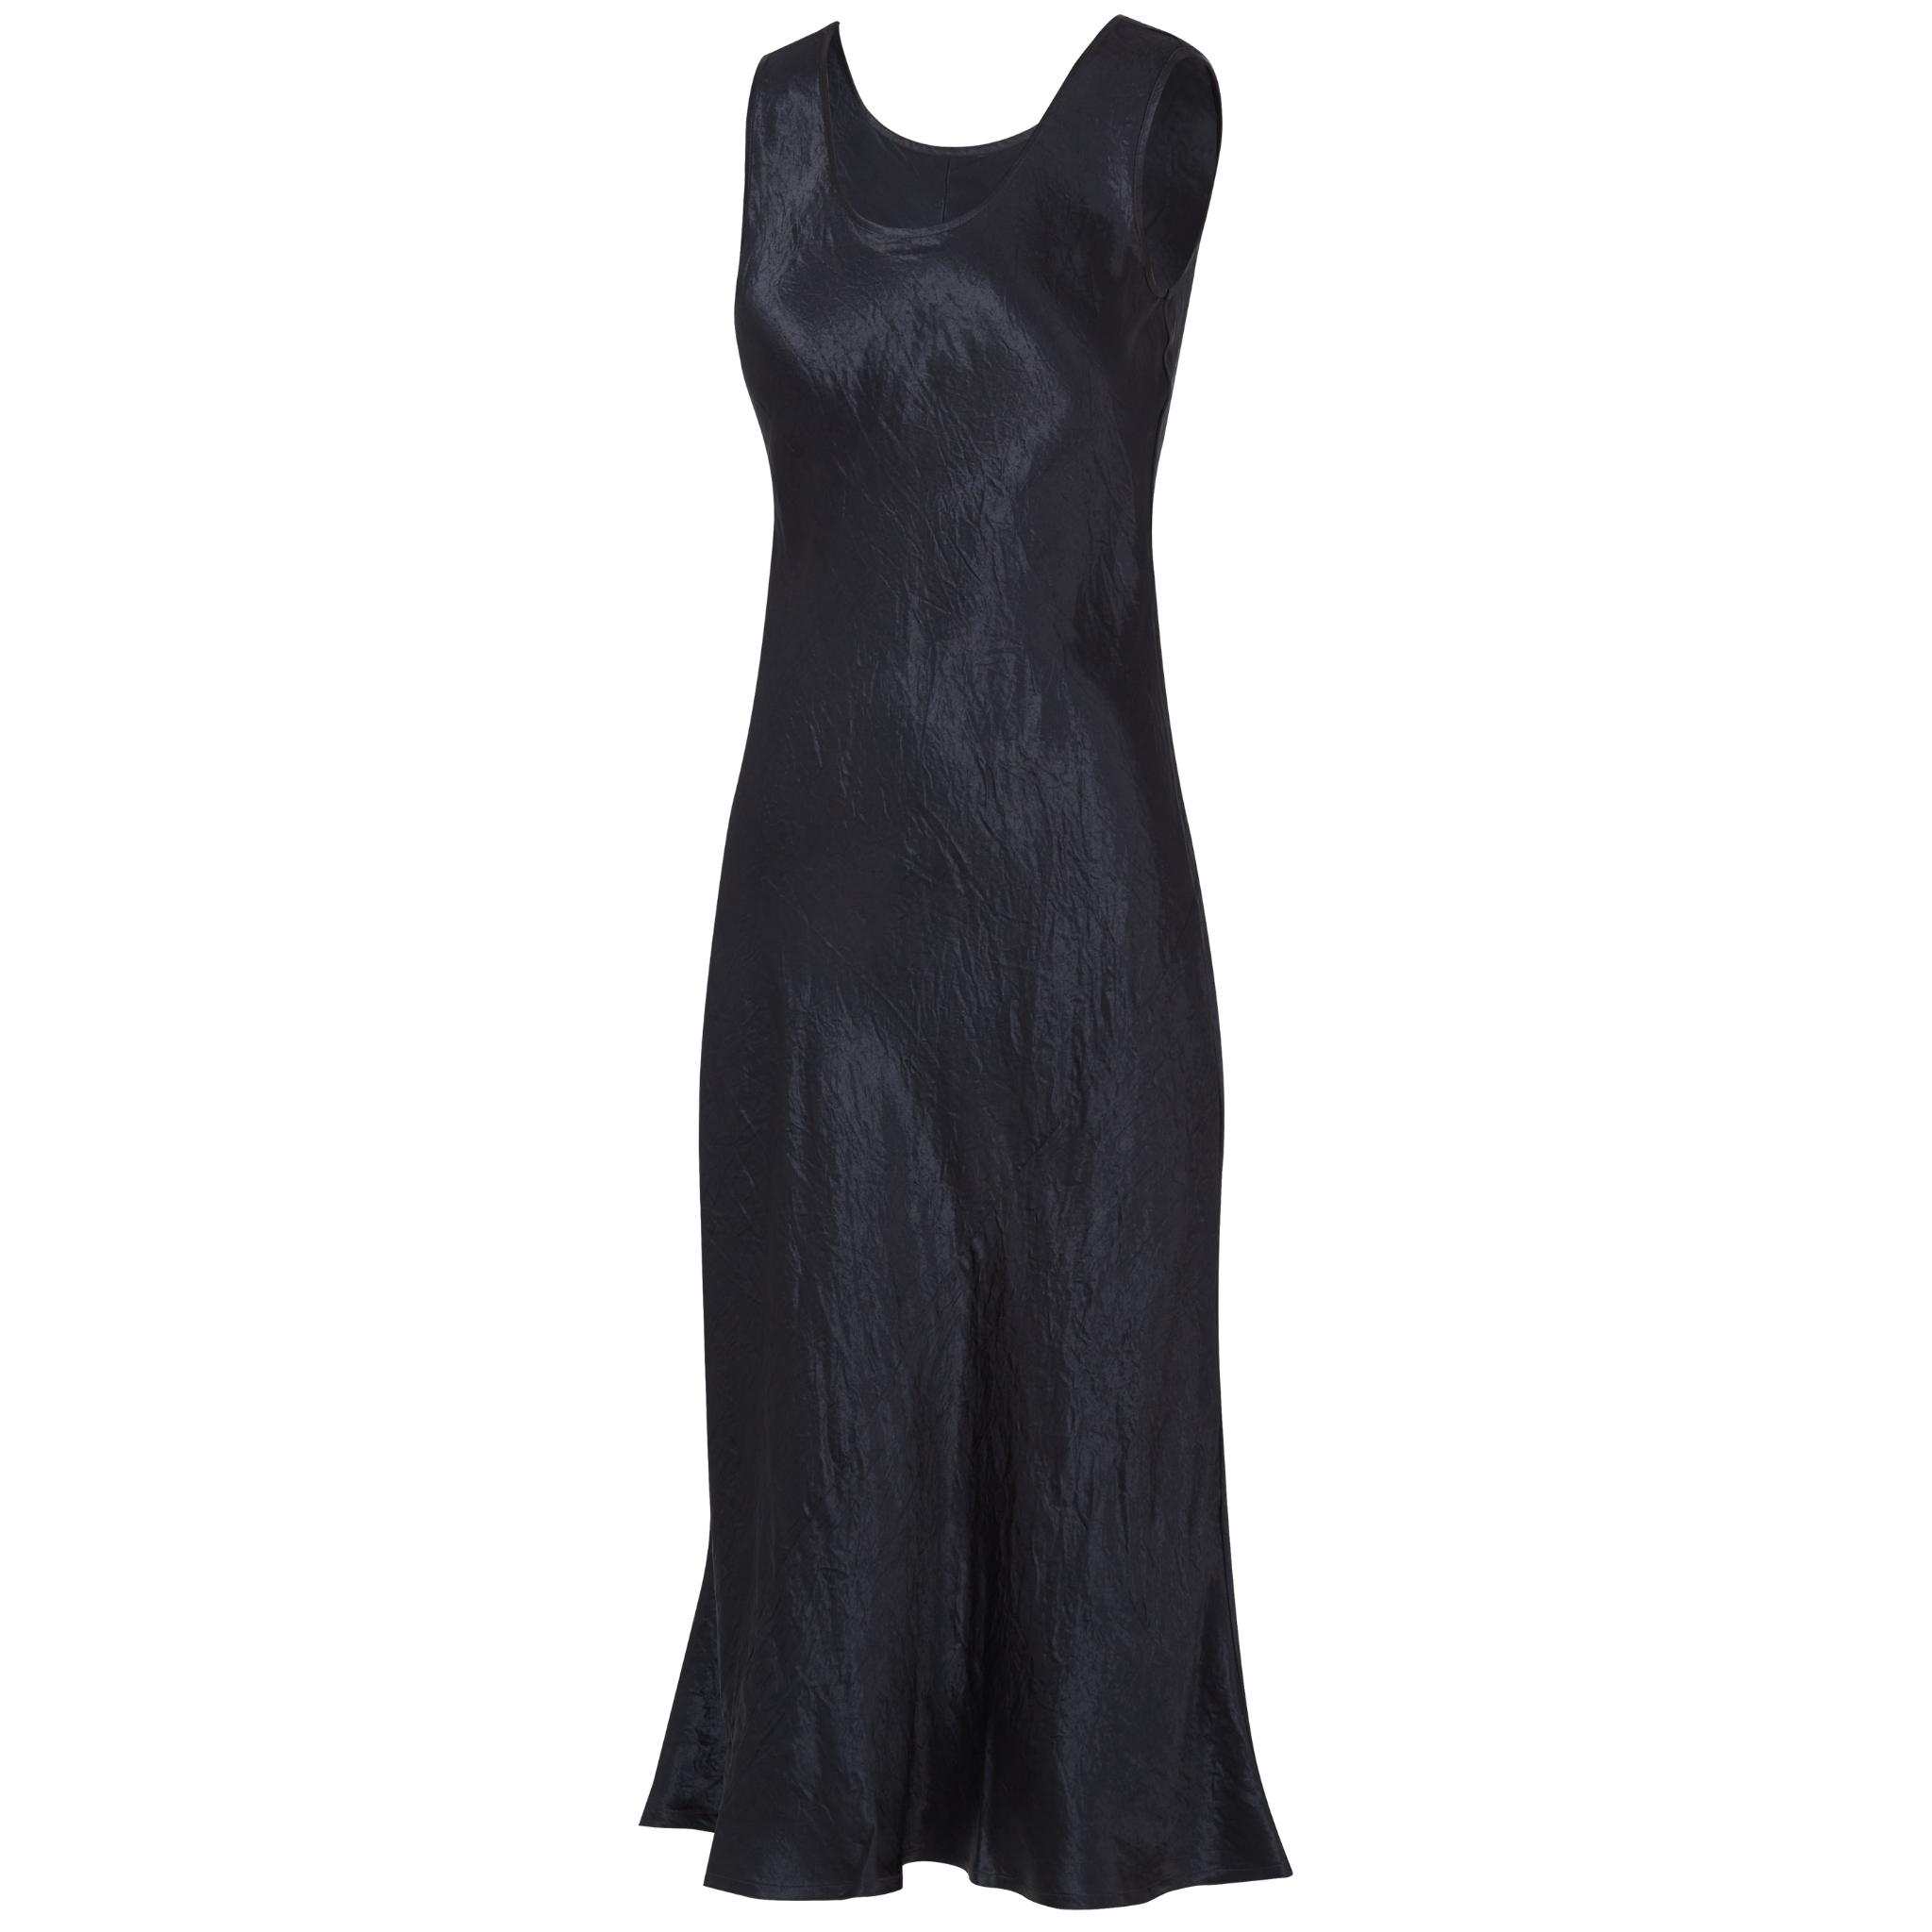 side view of a black slip dress